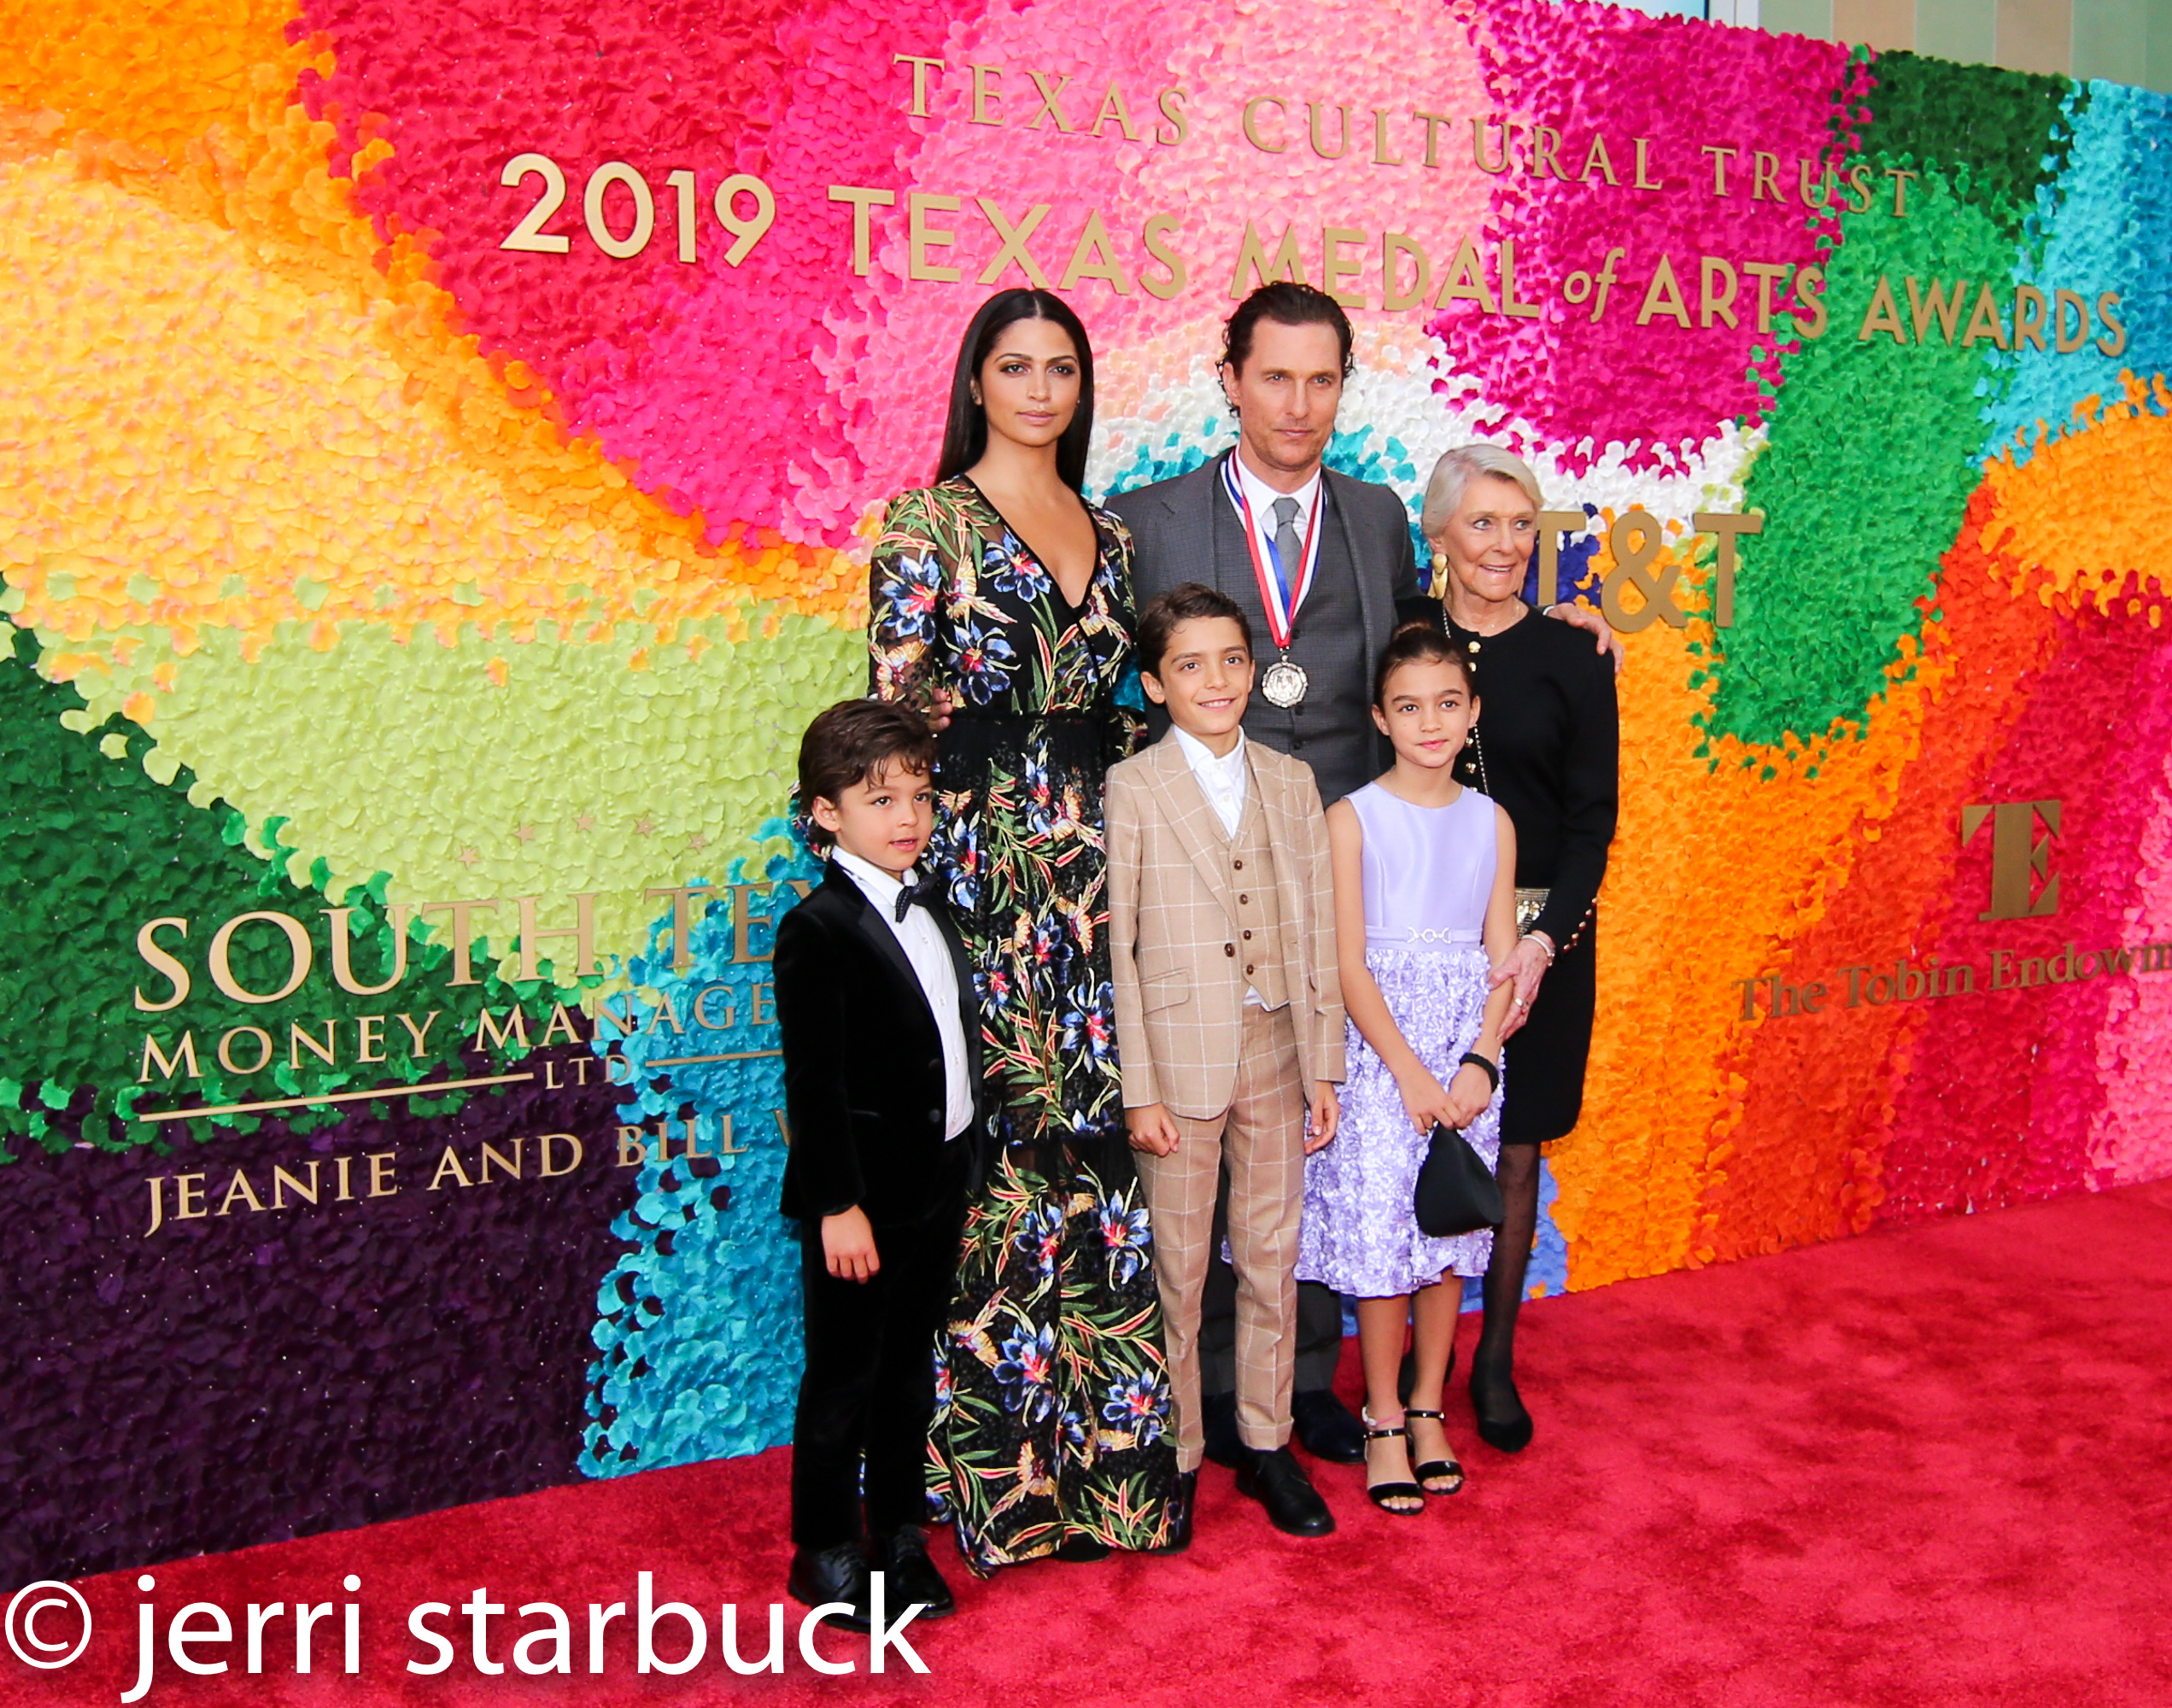 The 2019 Texas Medal of Arts Awards Red Carpet Photos